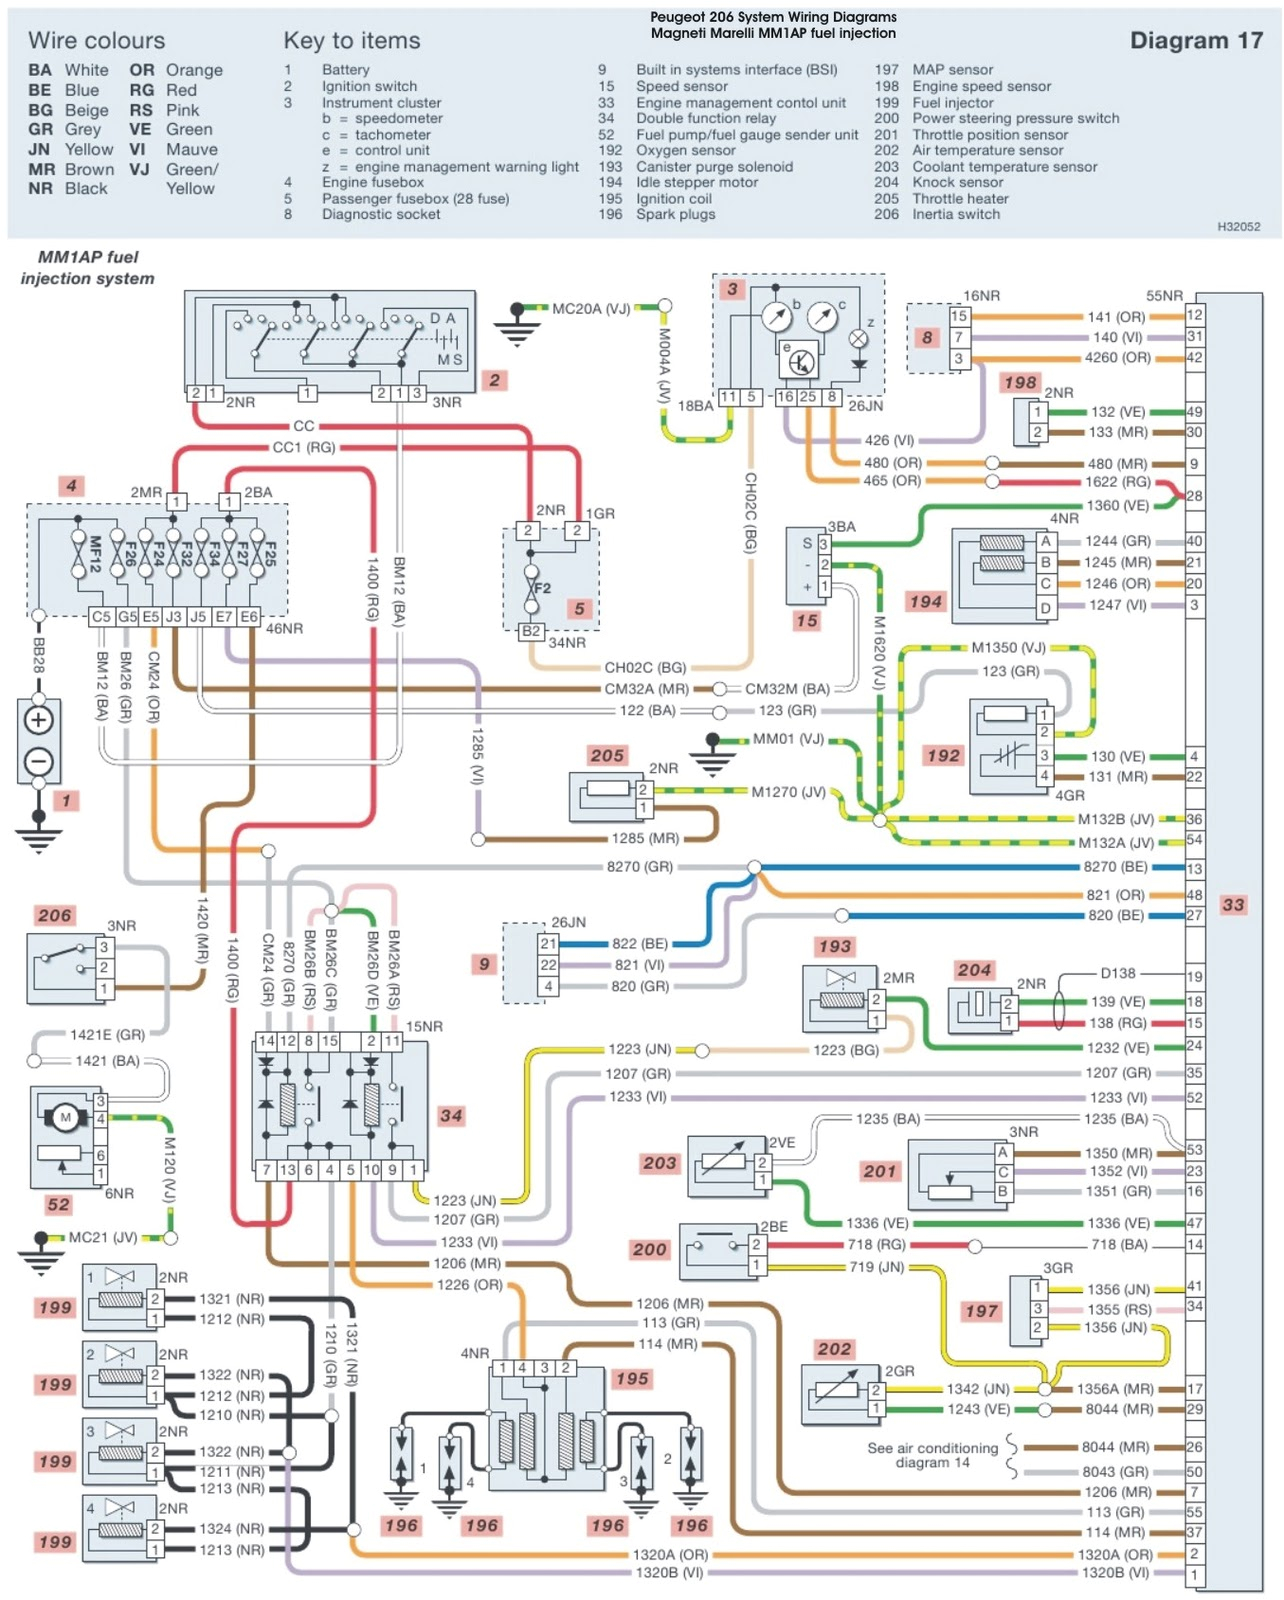 pug wiring diagrams wiring diagram todaypeugeot wiring schematics wiring diagram plug wiring diagram 305 chevy diagrams